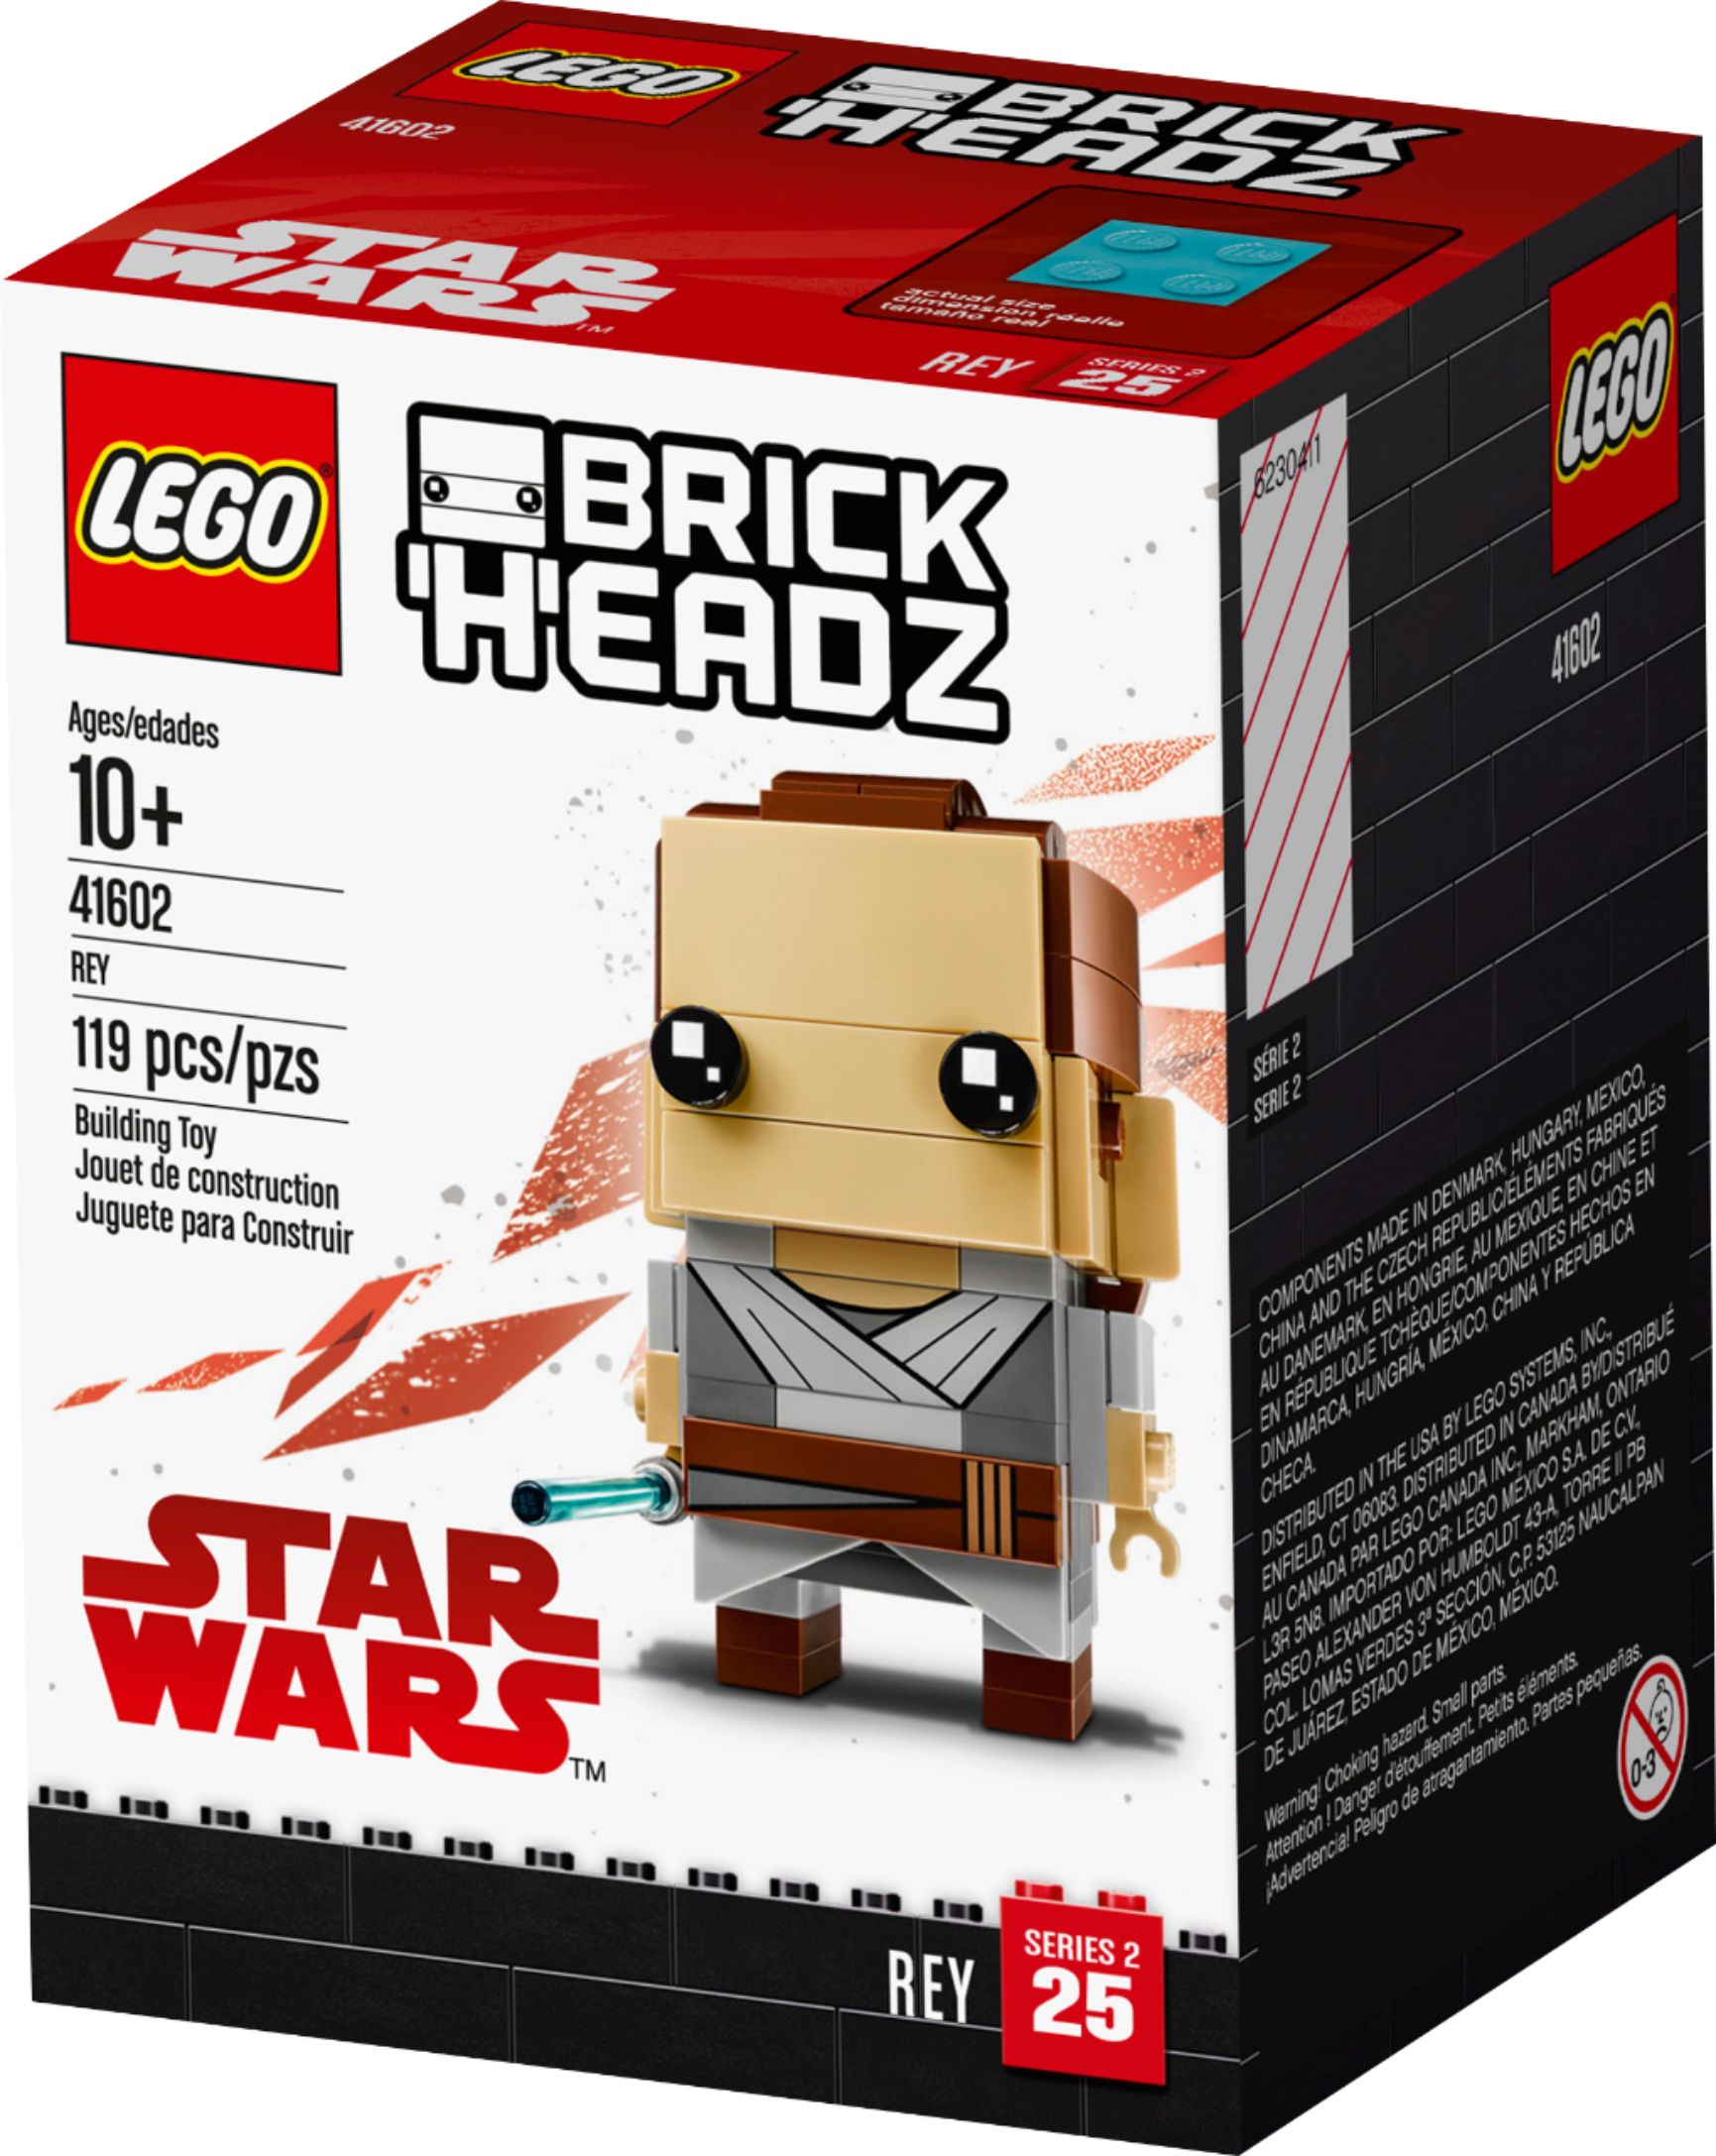 LEGO BrickHeadz Rey 41602 